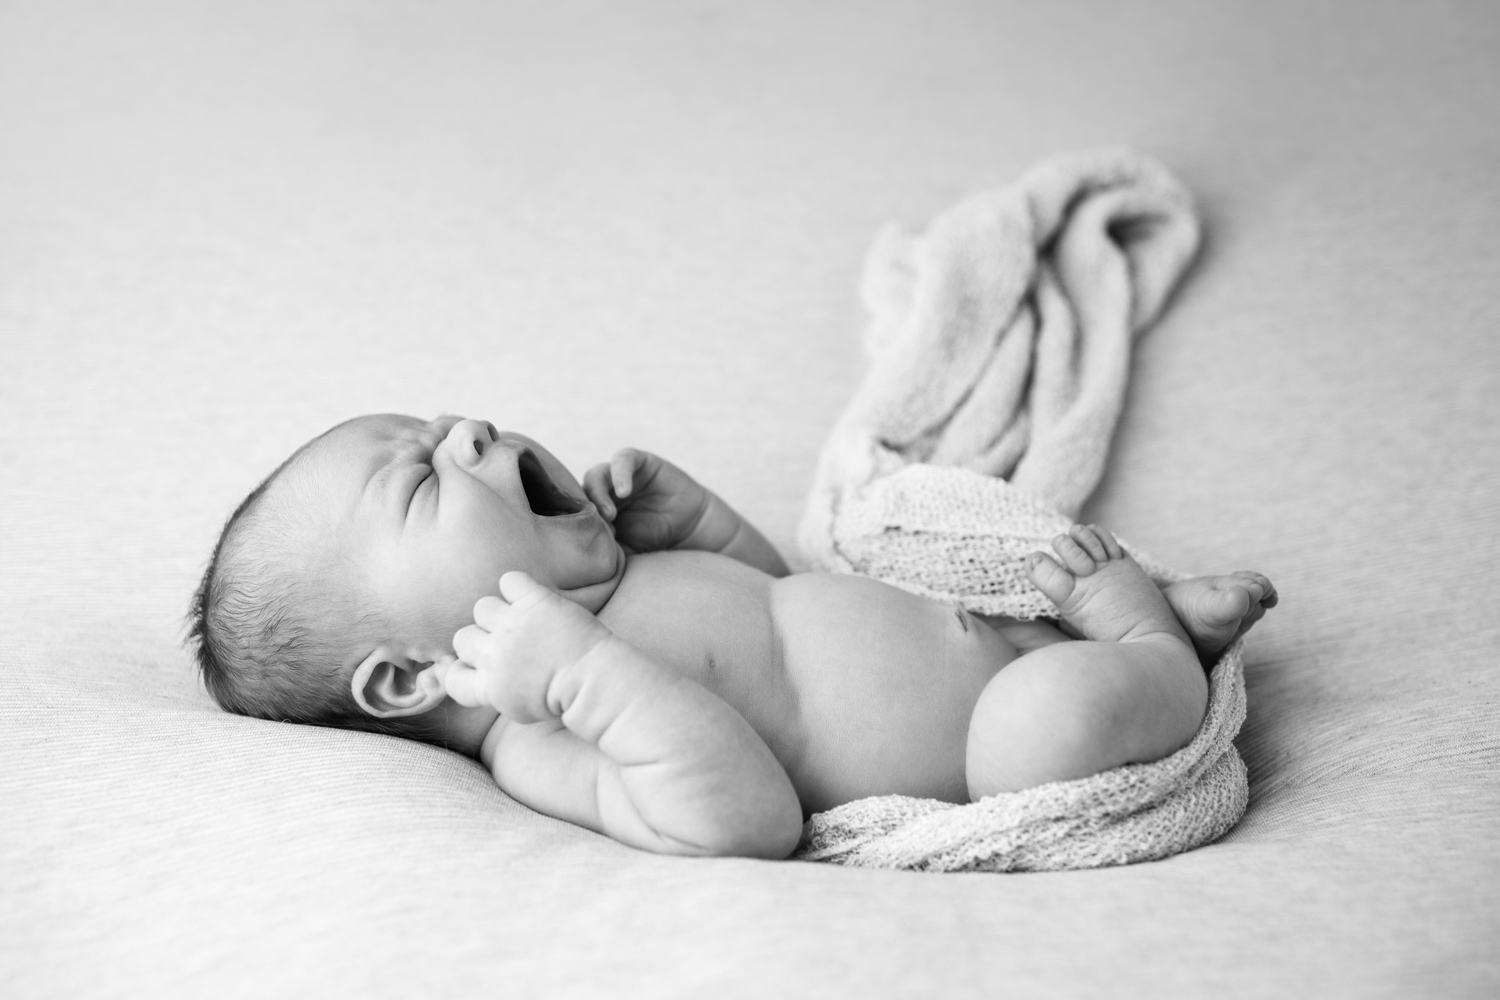 Newborn photographer caerphilly, near Cardiff, South Wales